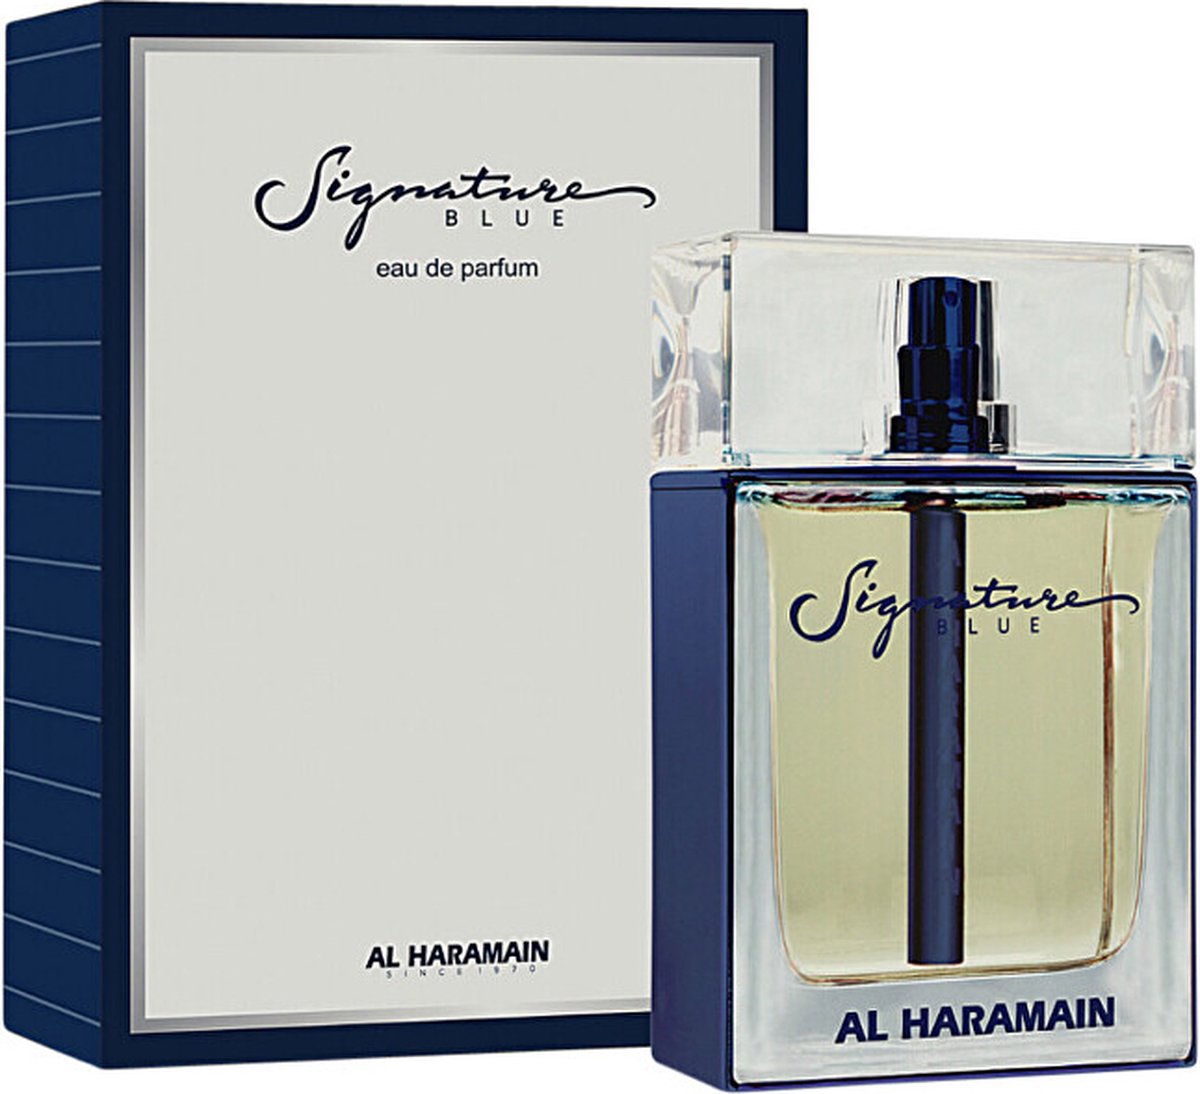 Al Haramain Signature Blue Eau De Parfum 100 Ml